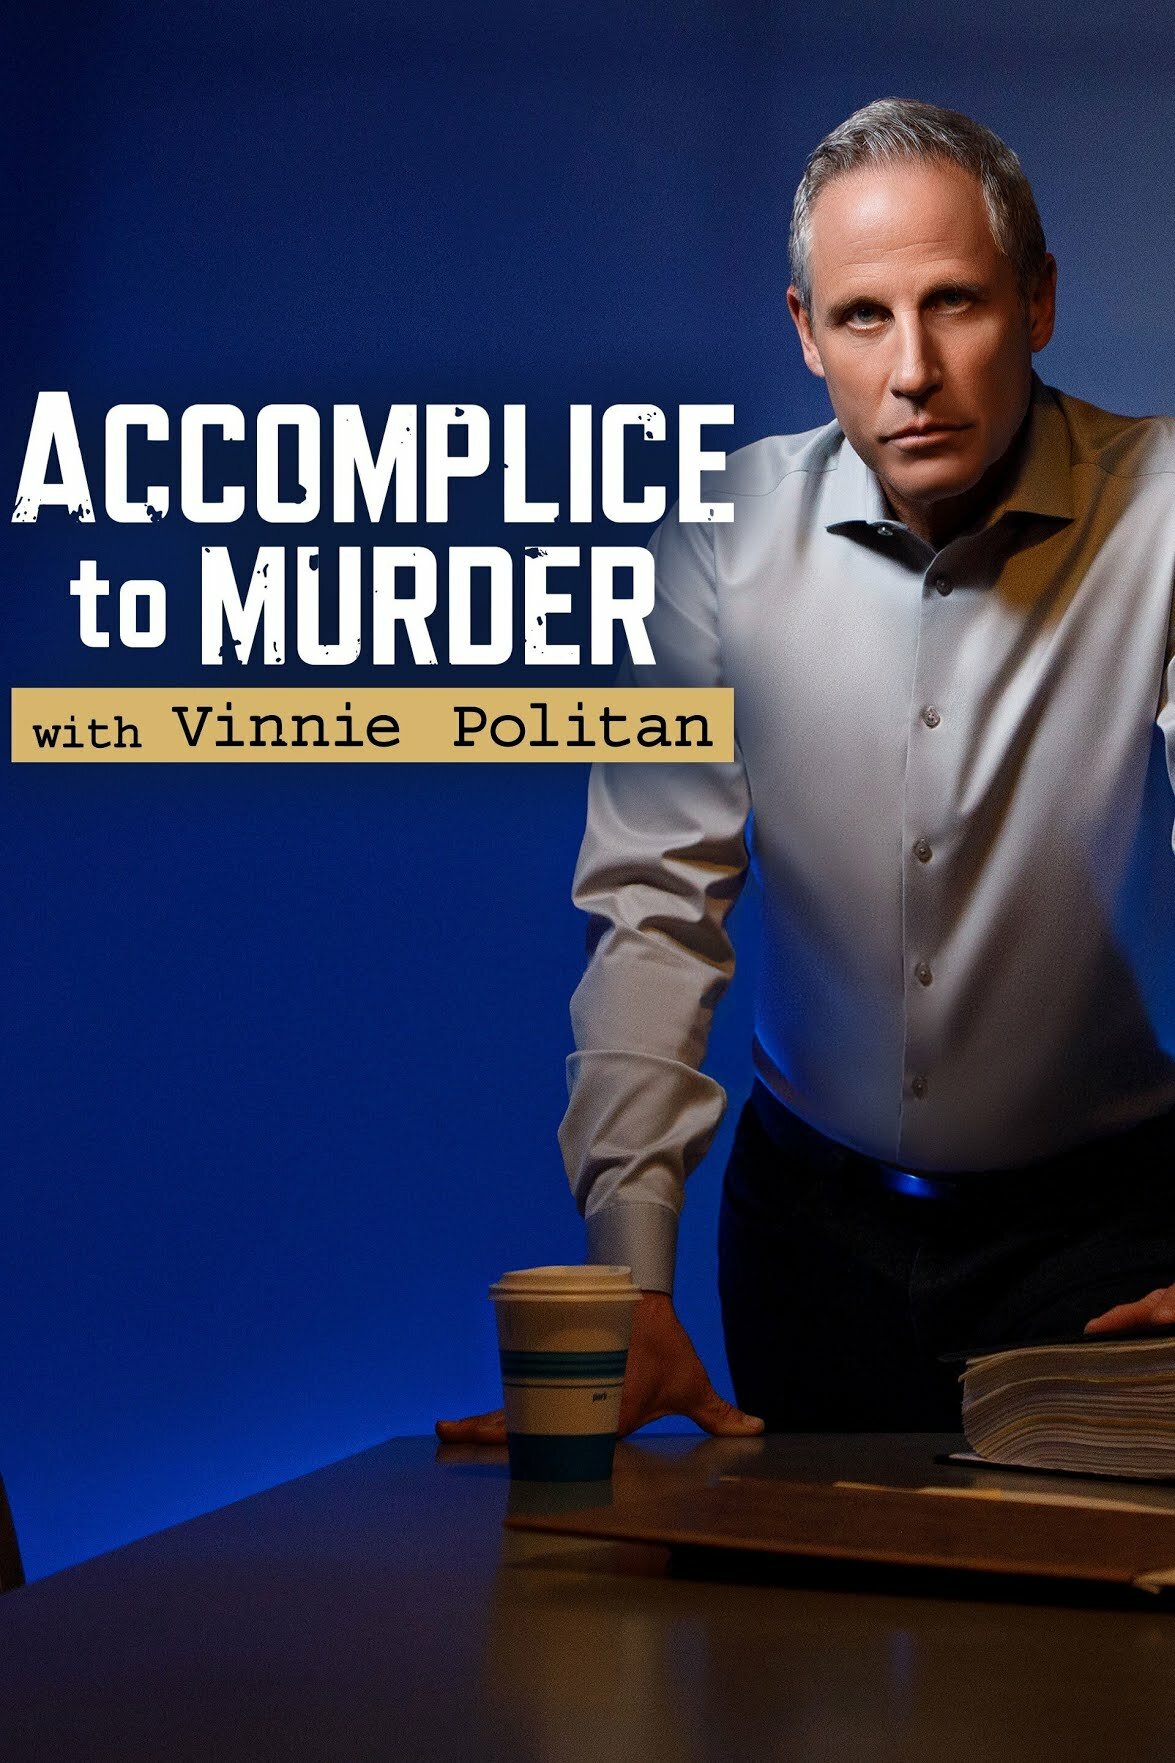 Accomplice to Murder with Vinnie Politan ne zaman